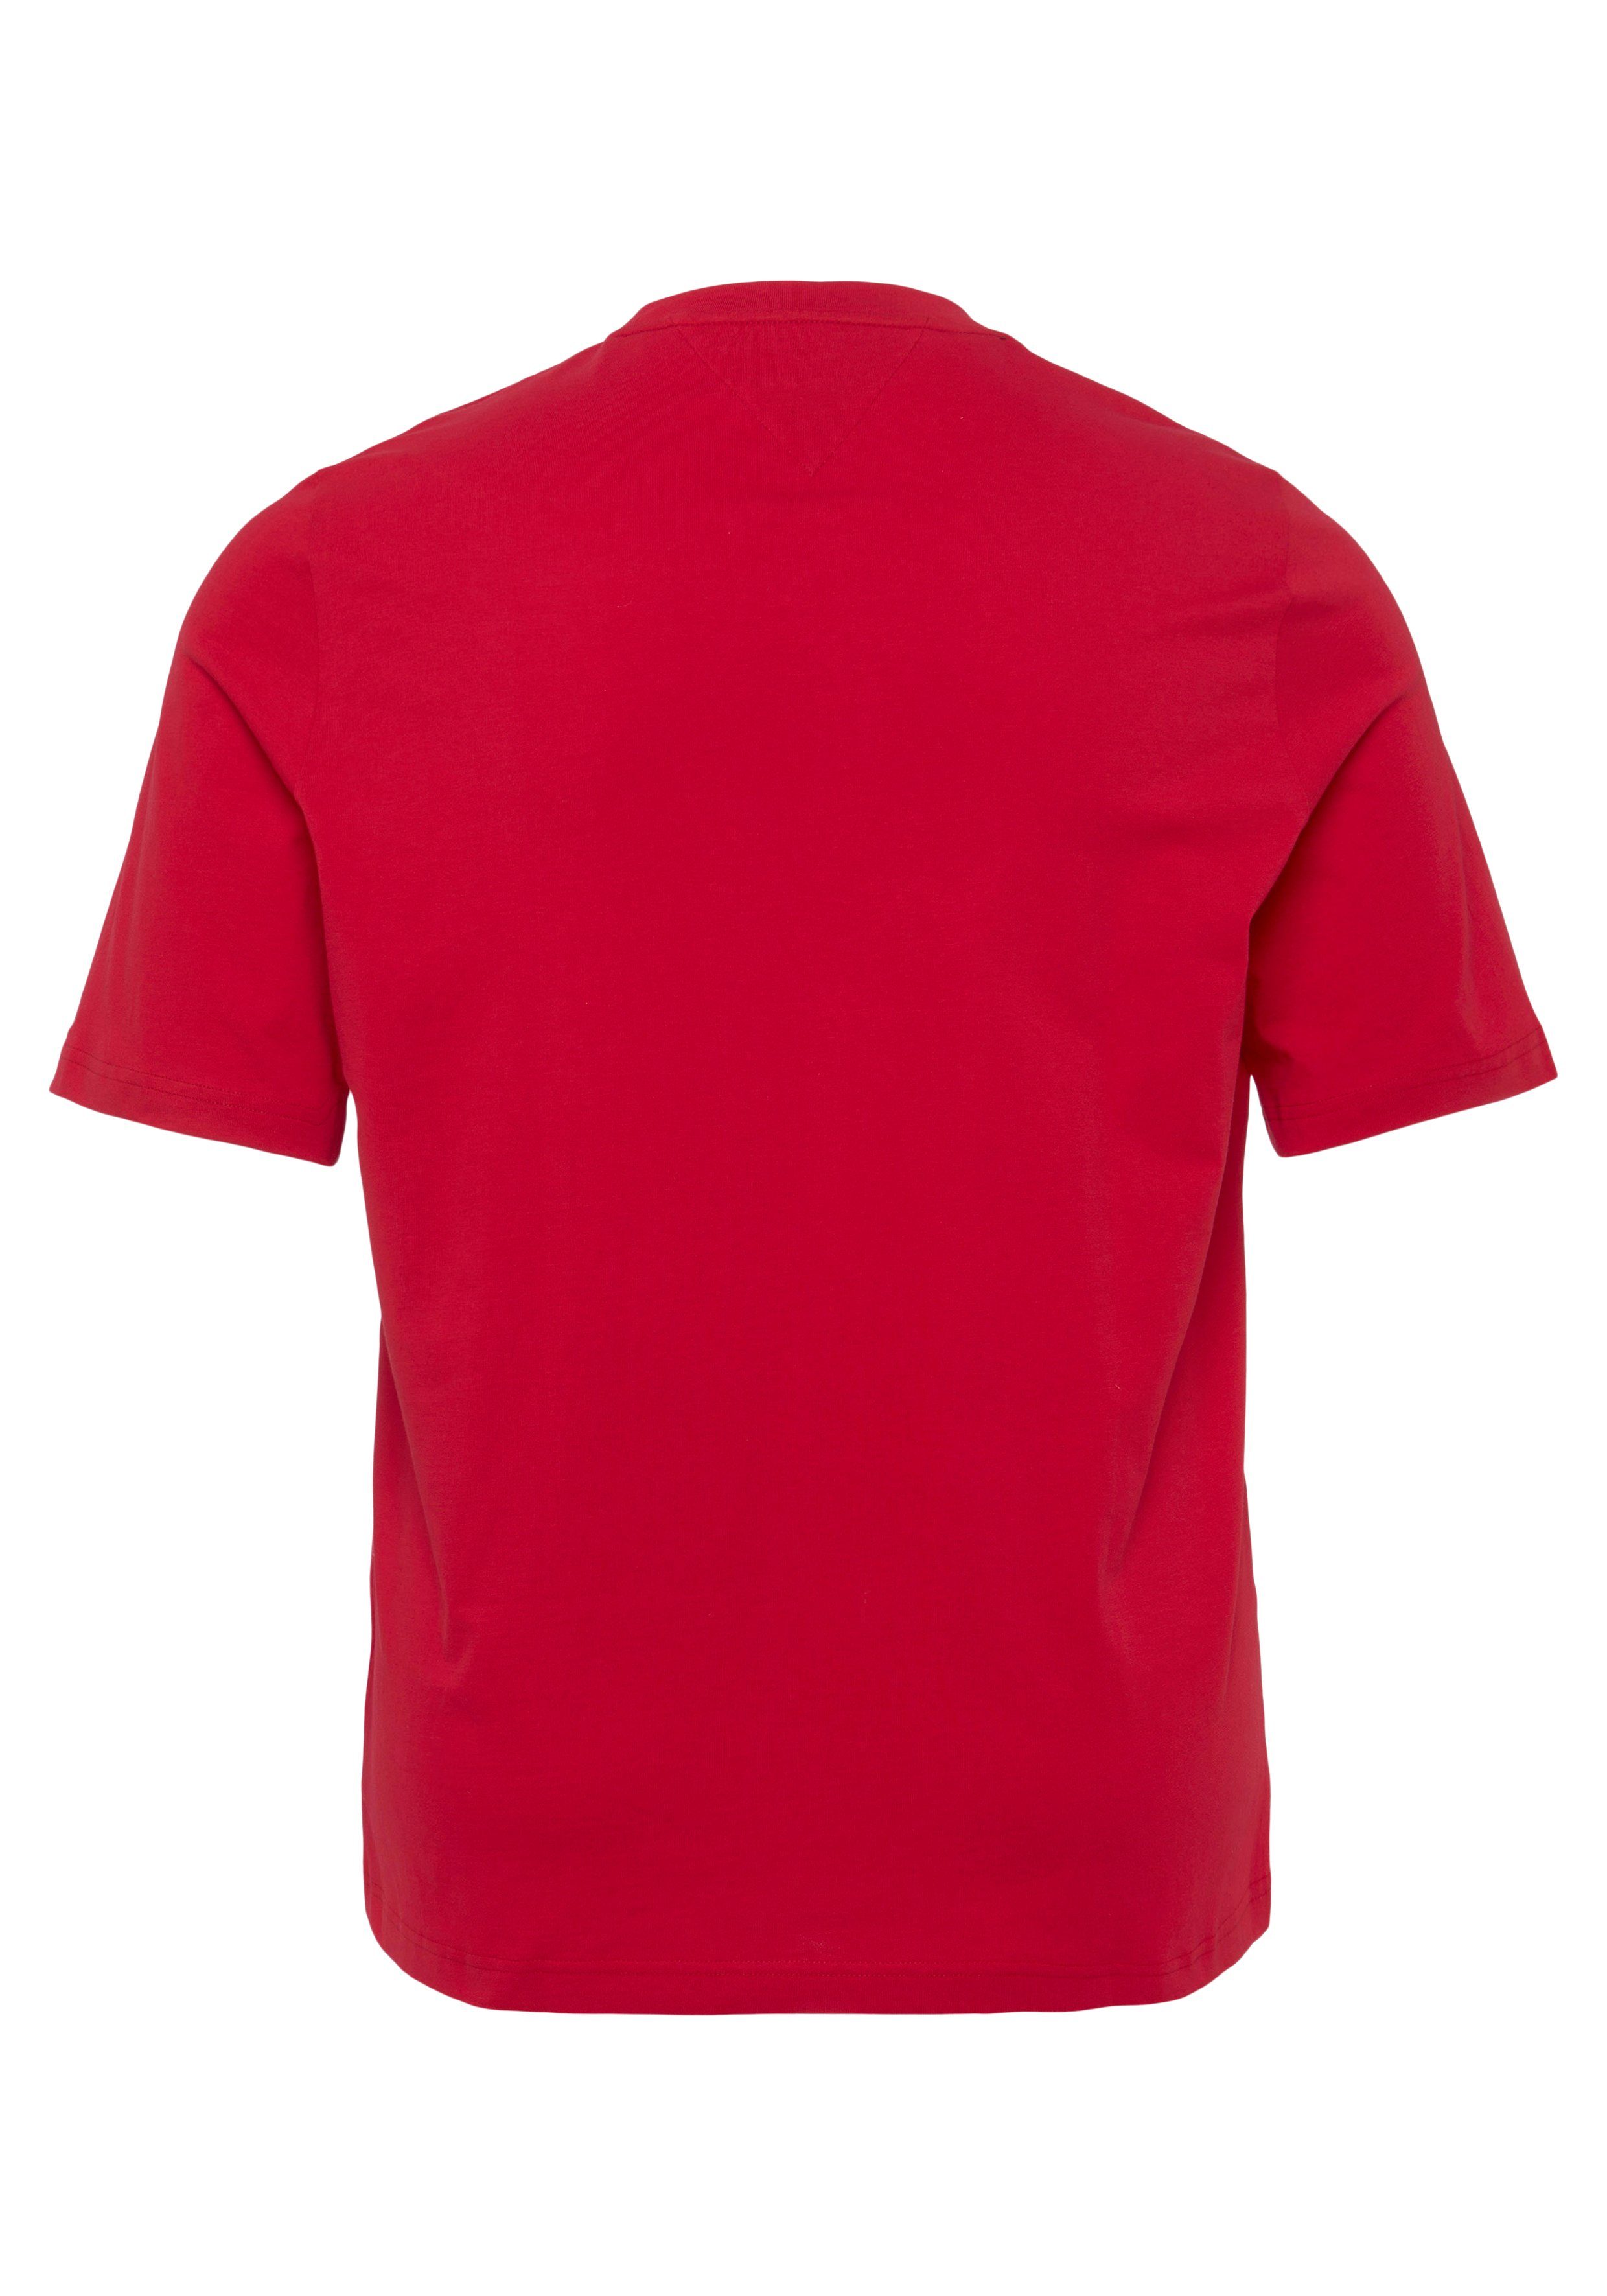 Tommy Hilfiger Big & Tall auf Hilfiger rot Brust BT-TOMMY T-Shirt LOGO der Tommy TEE-B Logoschriftzug mit